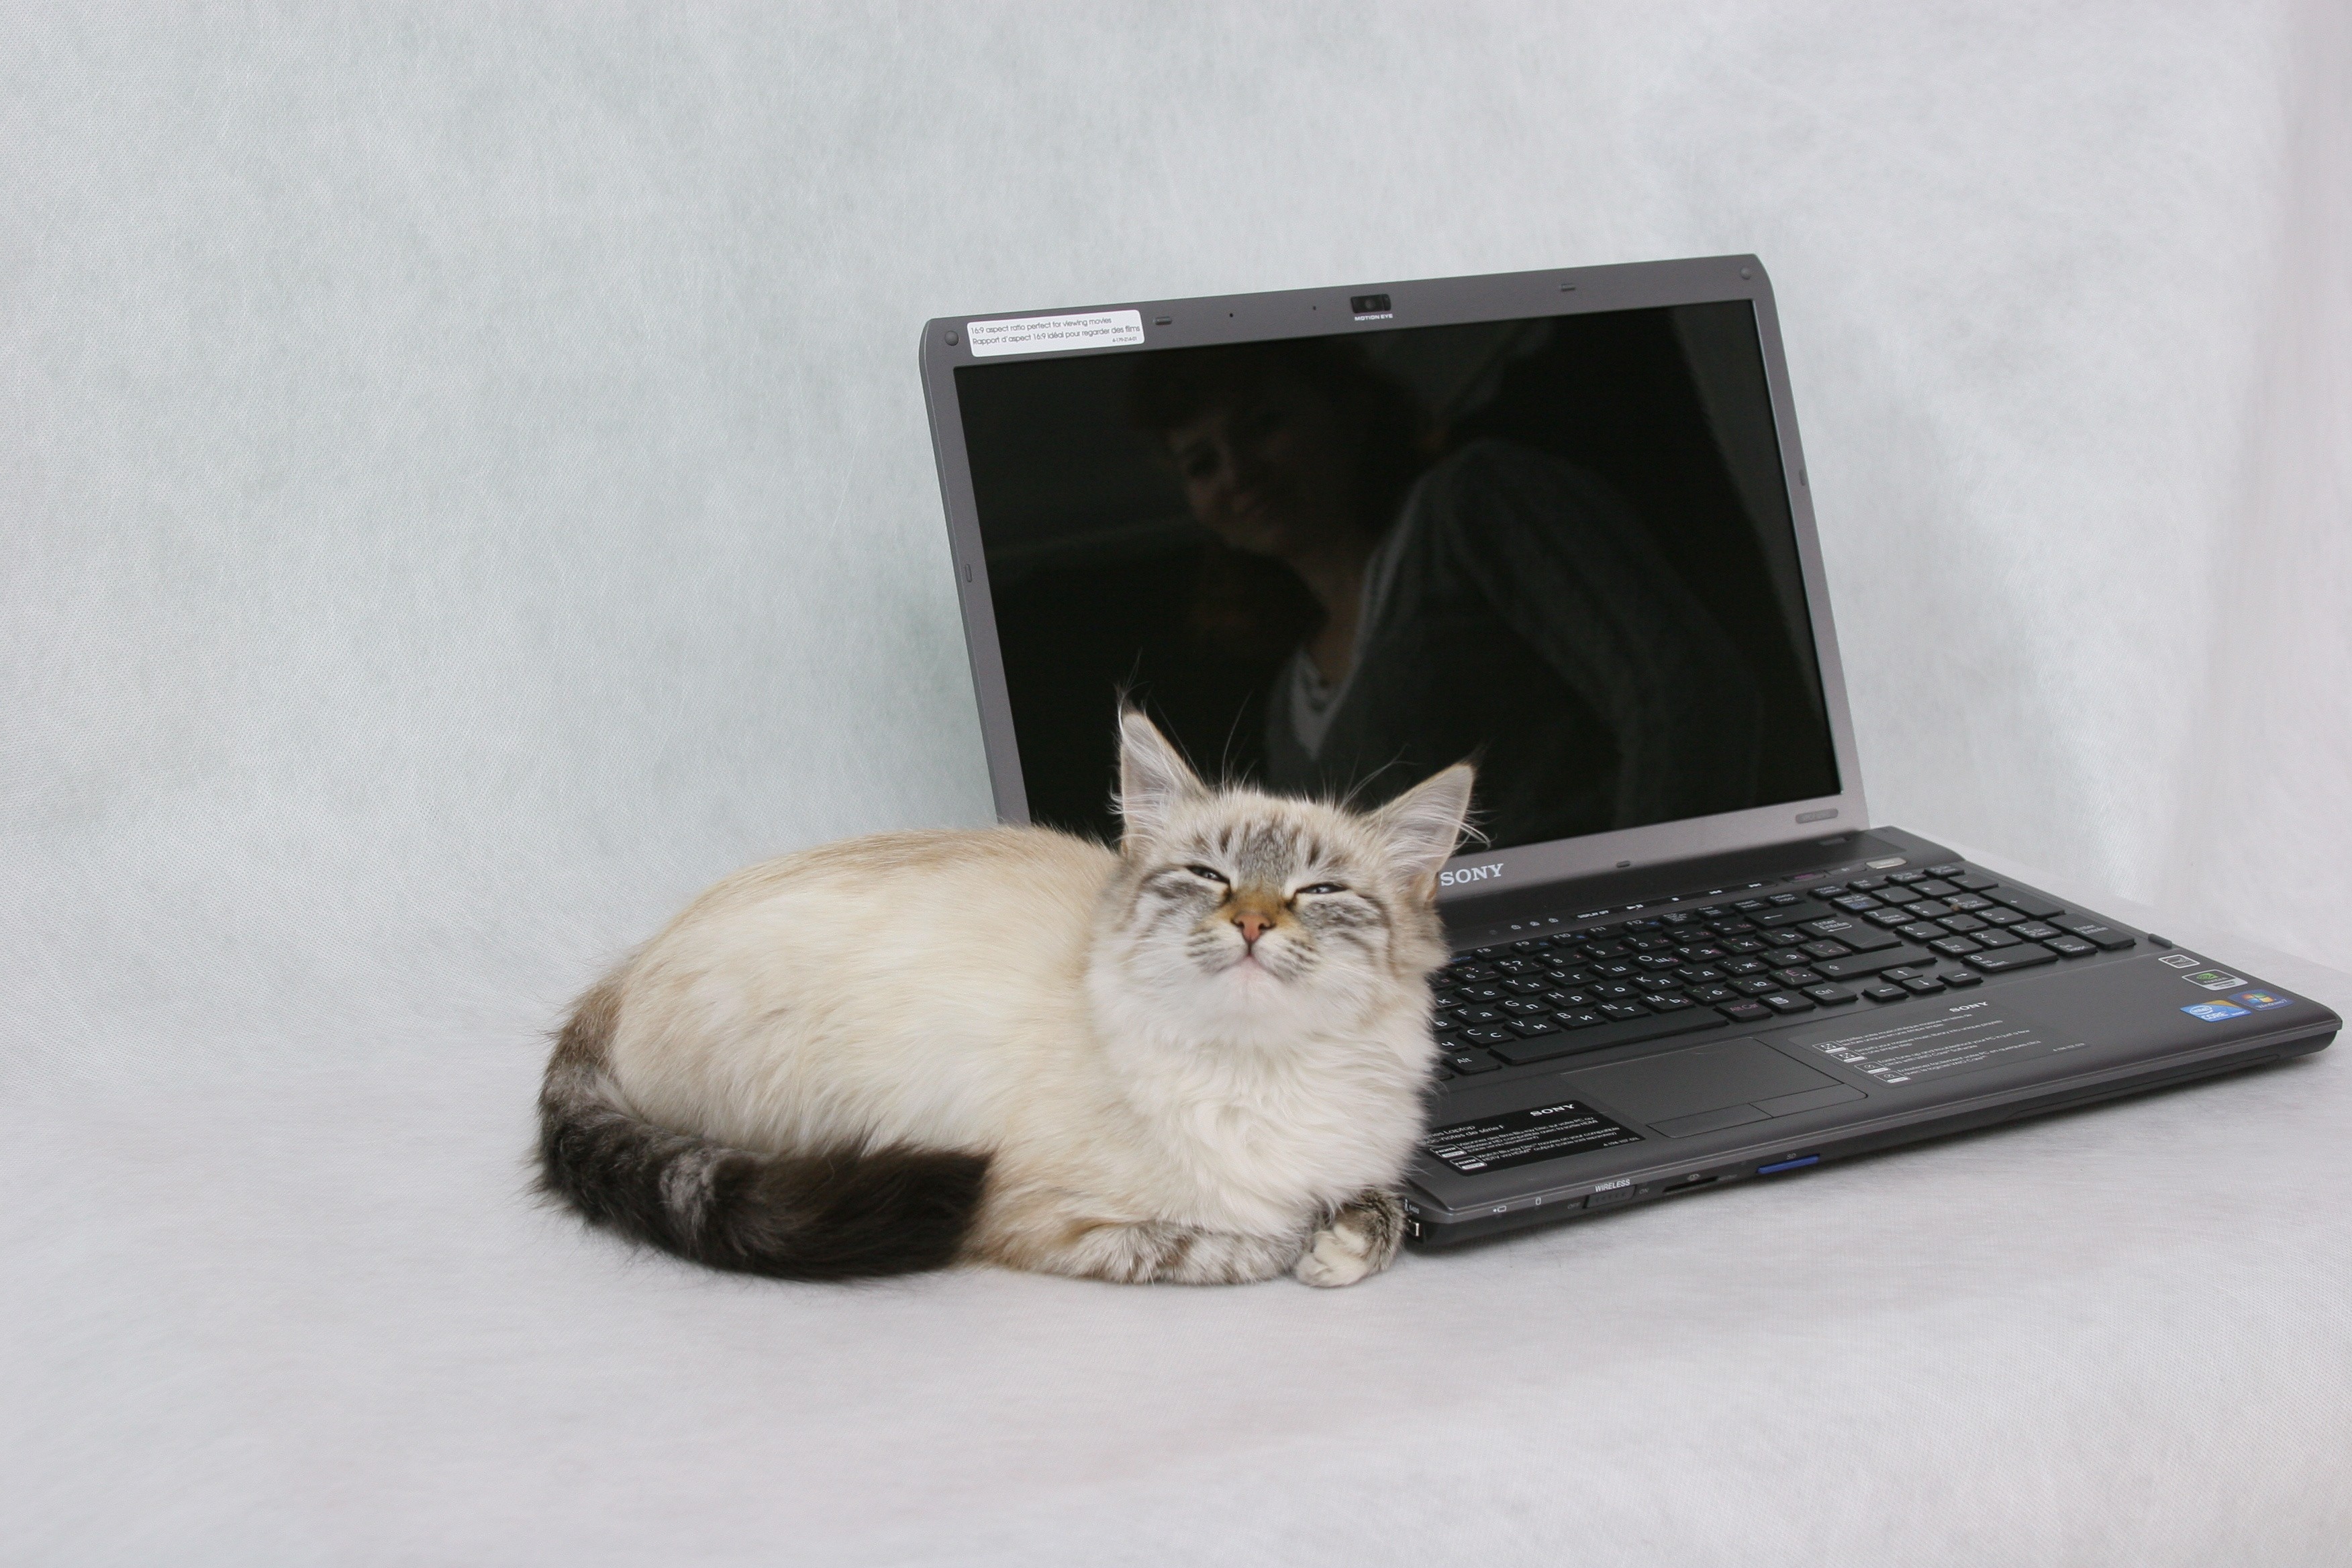 Animals cats laptops wallpaper. PC